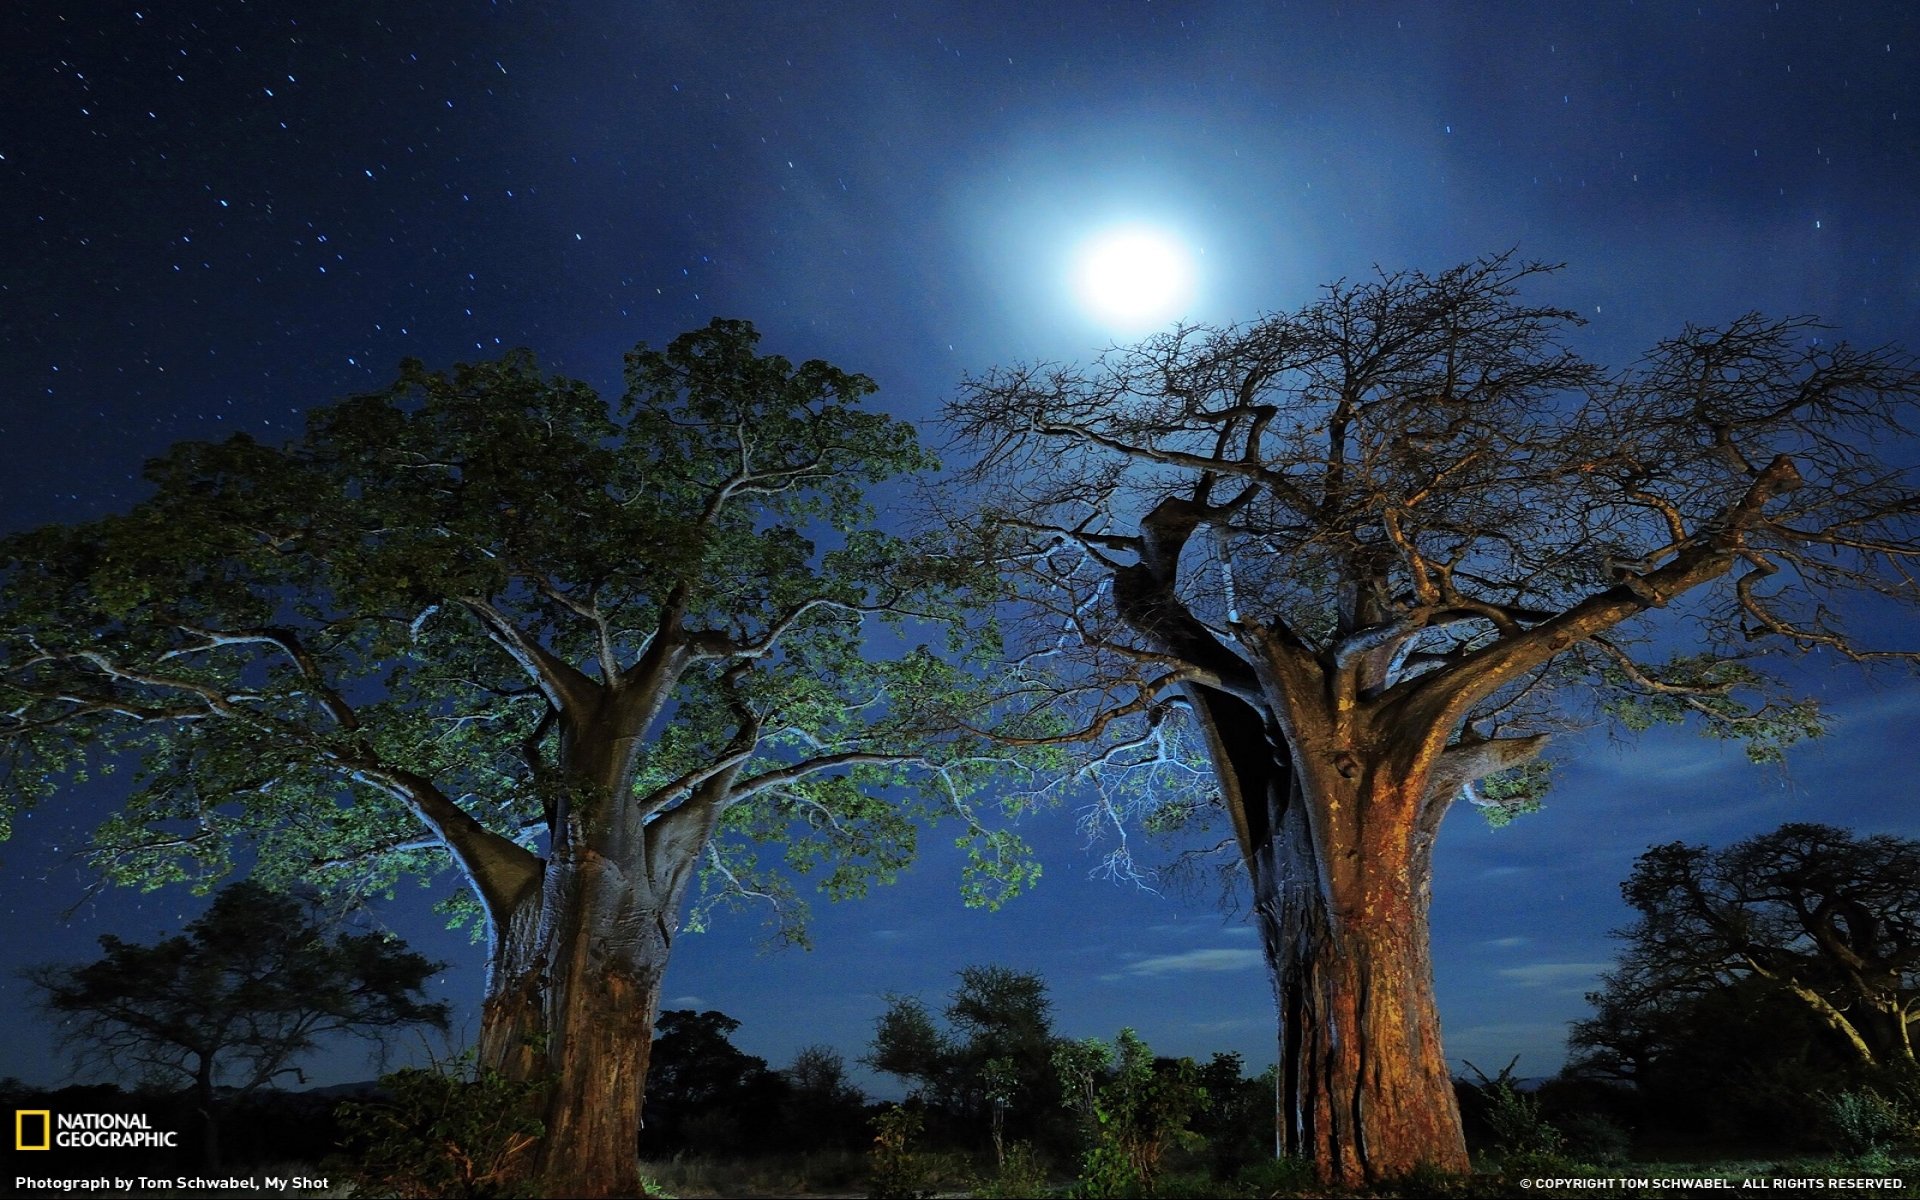 Trees on Starry Night by Tom Schwabel